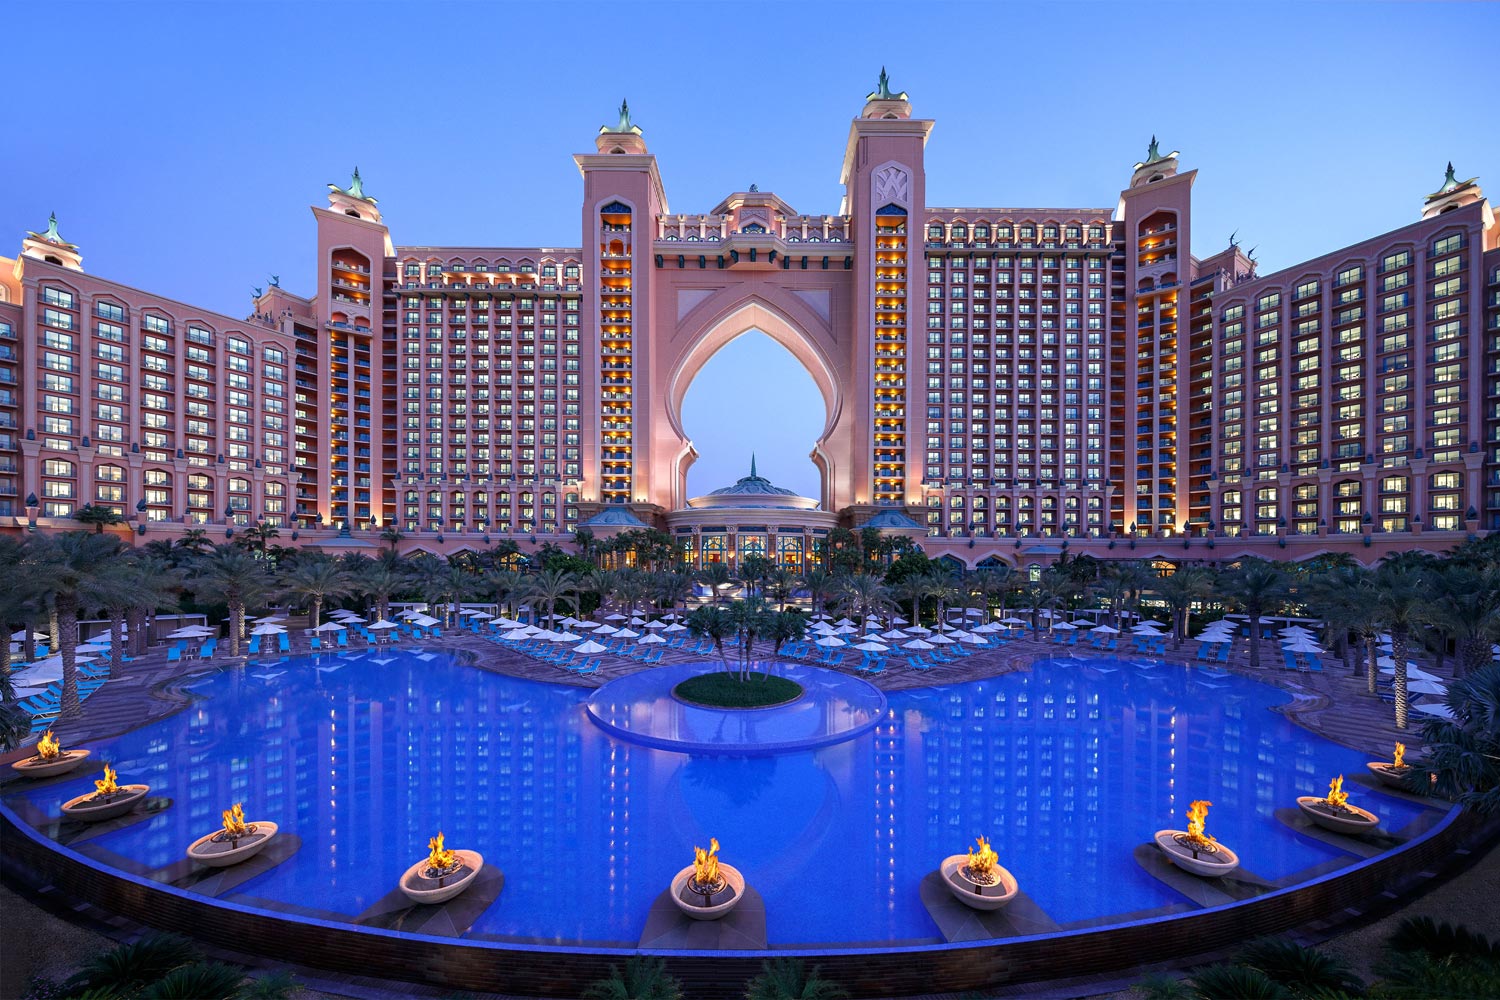 Atlantis The Palm Dubais Iconic Five Star Hotel And Luxury Resort My